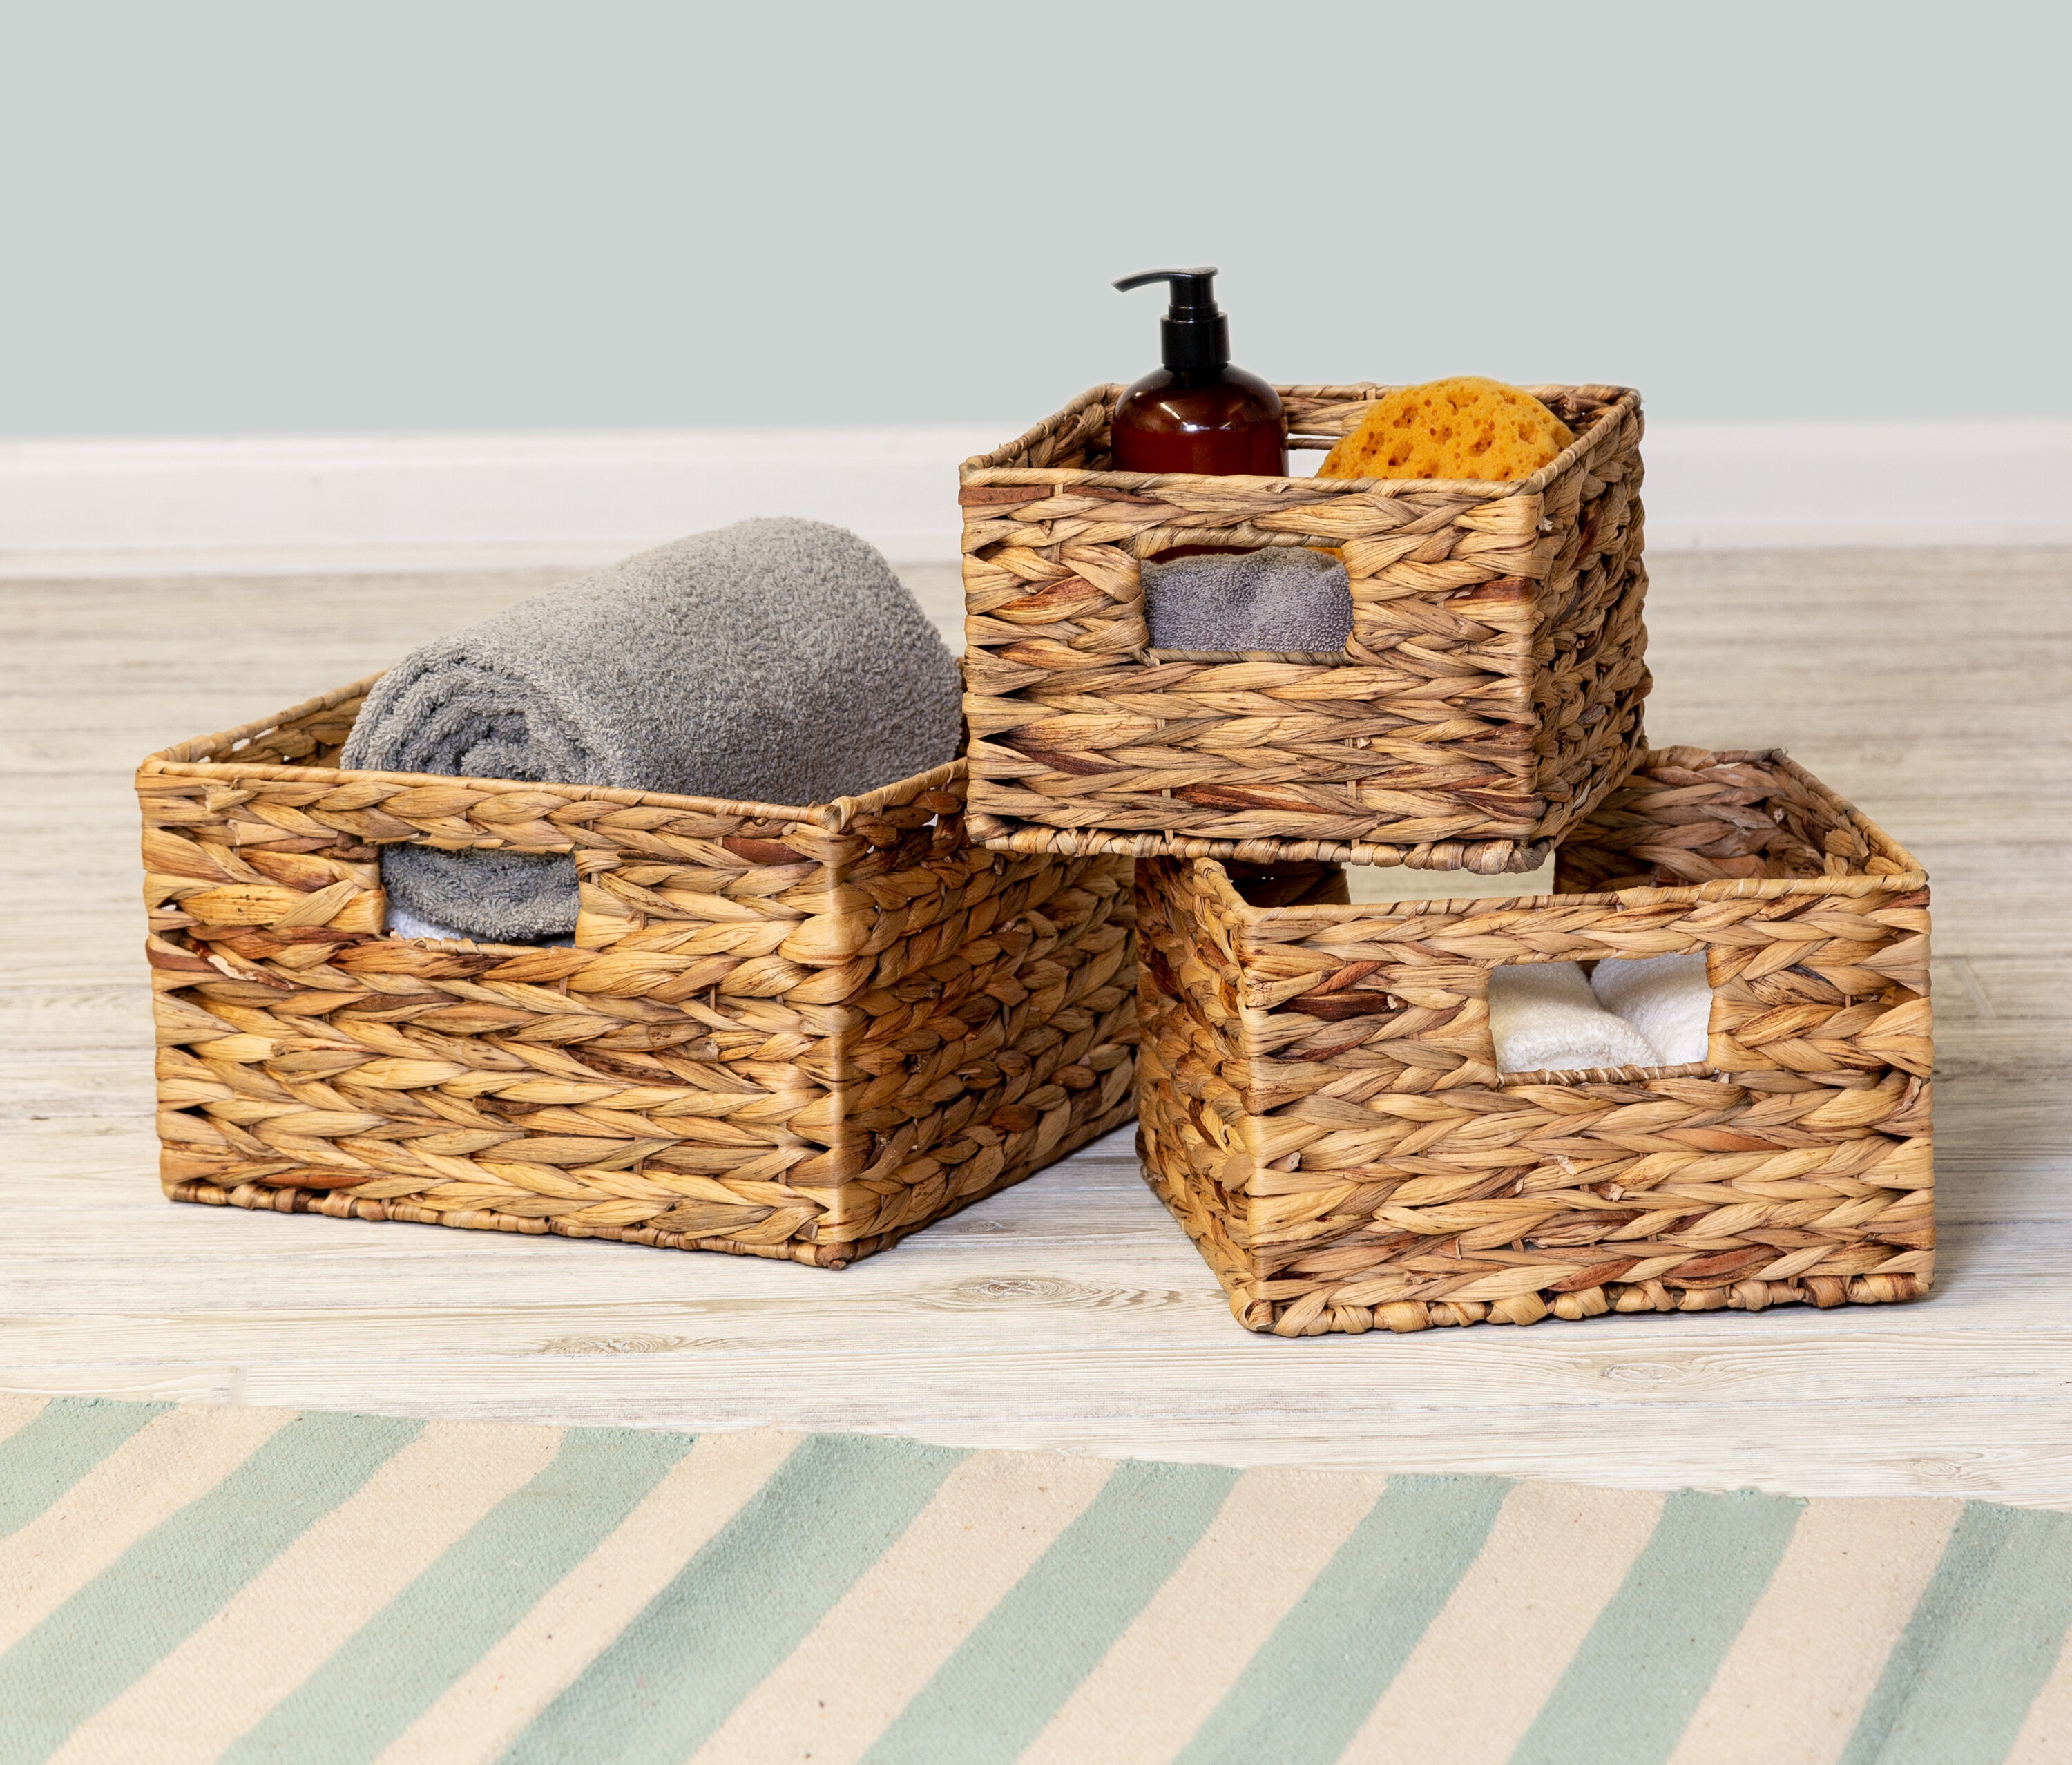 https://visualhunt.com/photos/23/moraga-3-piece-wicker-rattan-basket-set.jpg